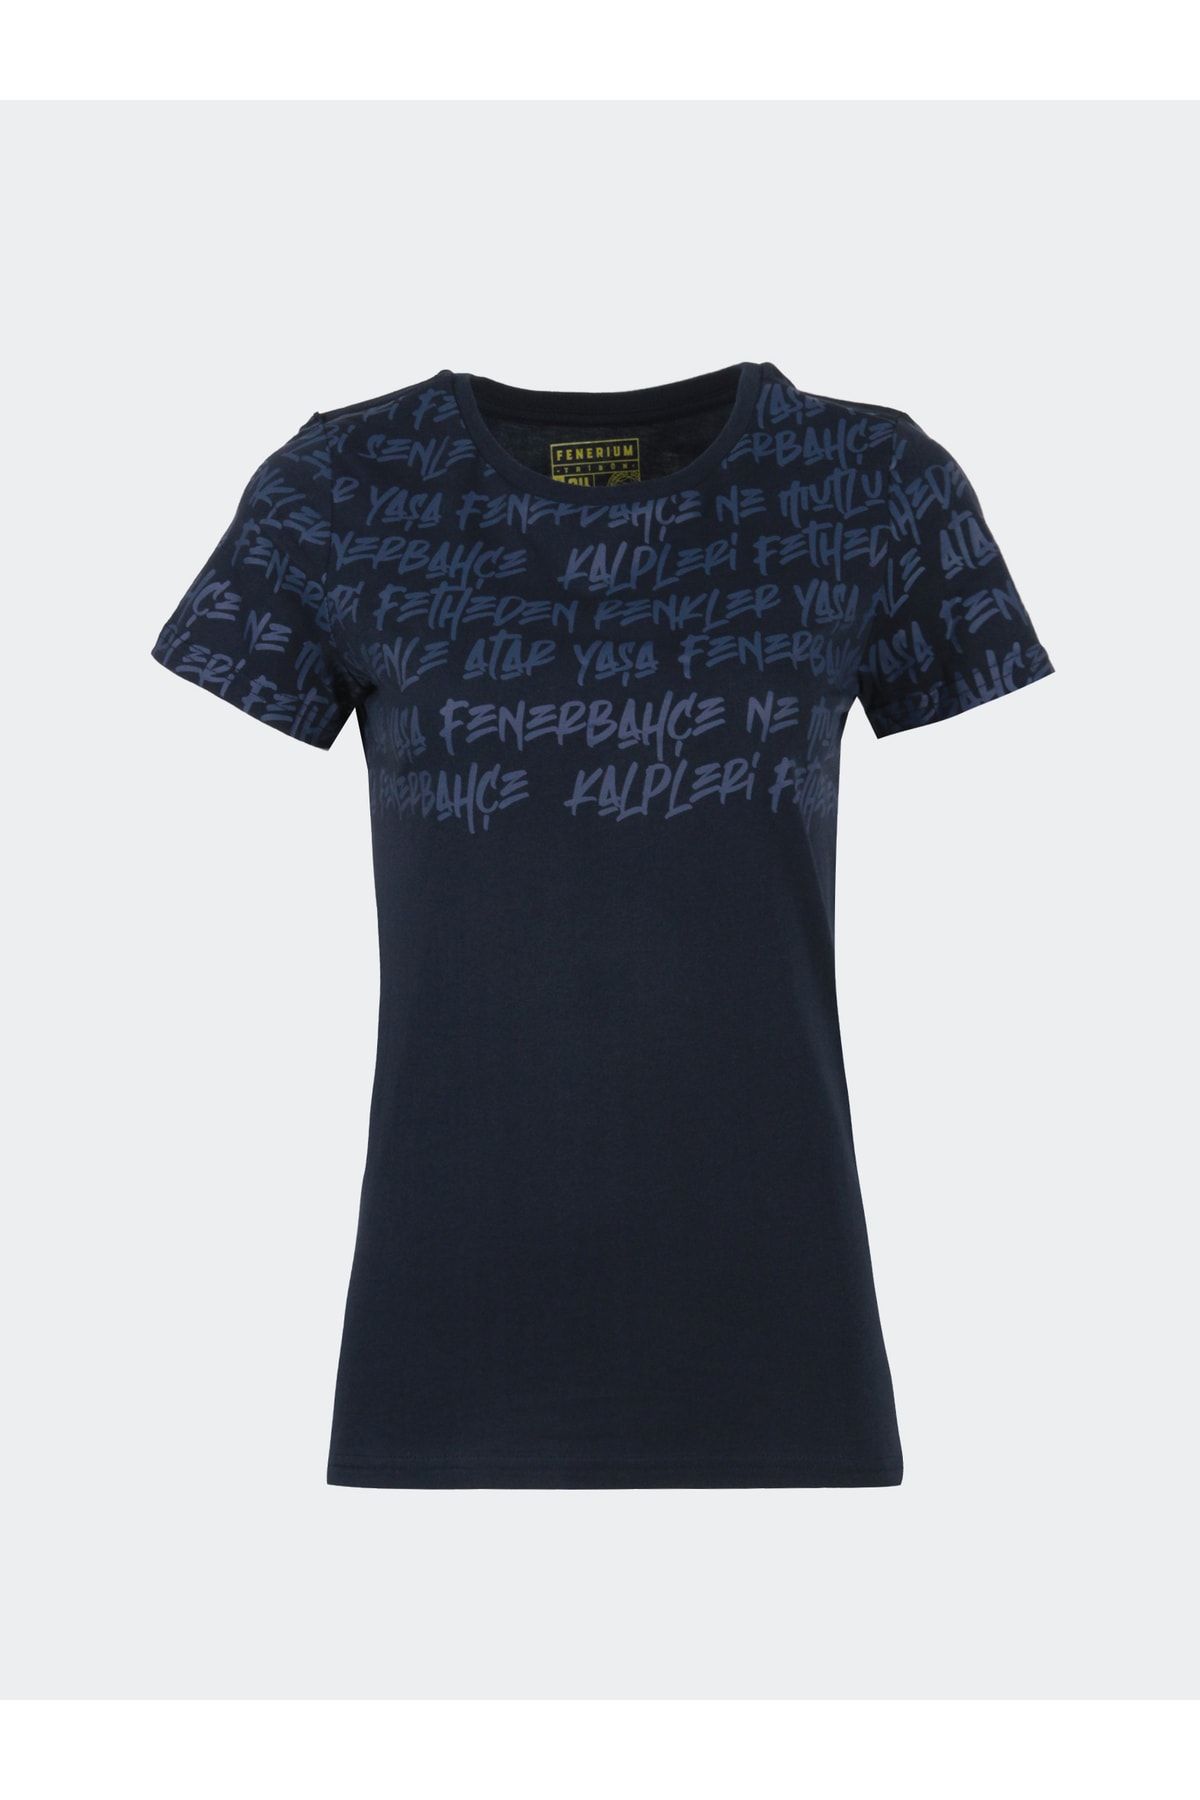 Fenerbahçe Kadın Tribün Pattern T-shirt